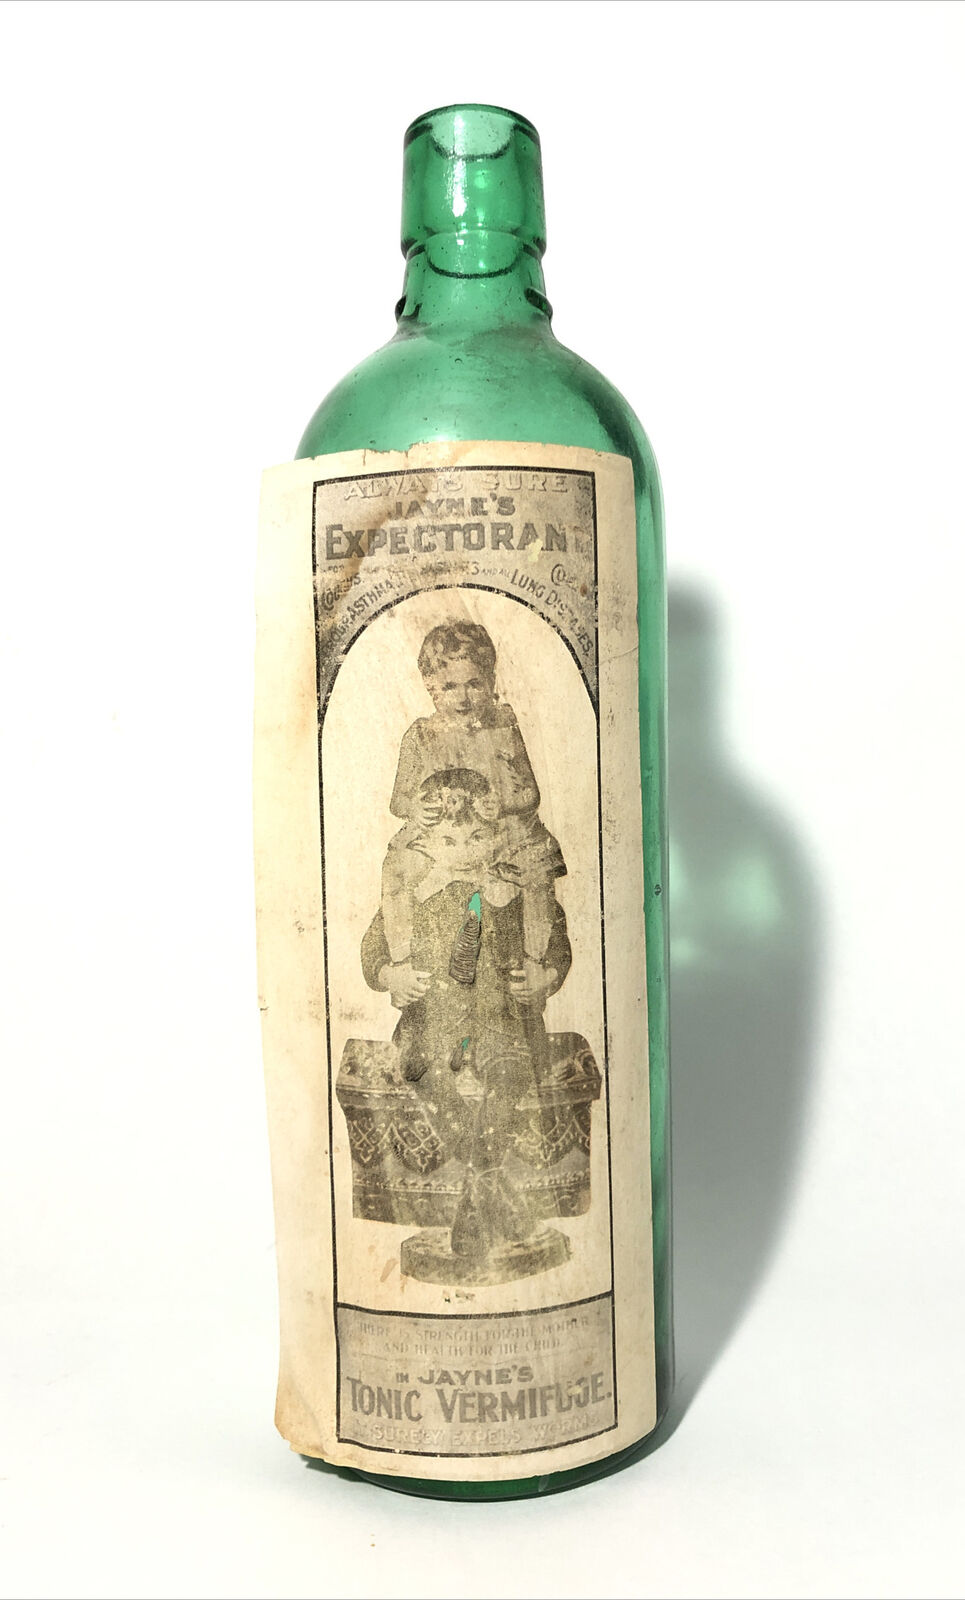 Antique Green Glass 10.5” Medicine Bottle- Jayne’s Expectorant-Full Label. Tonic